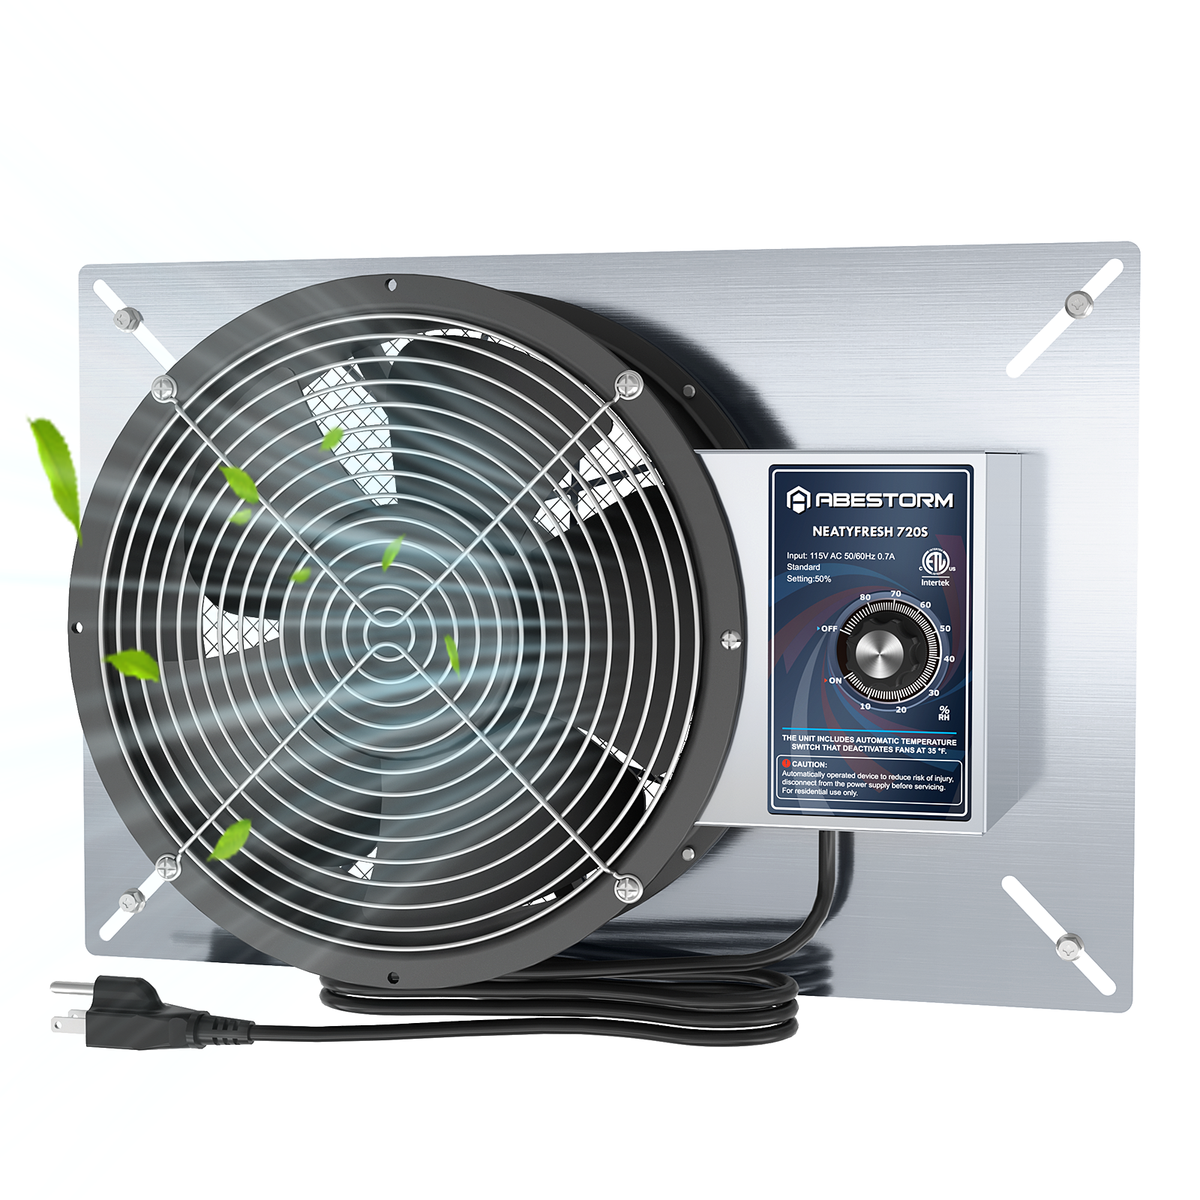 Abestorm 720CFM Crawlspace Ventilator Fan